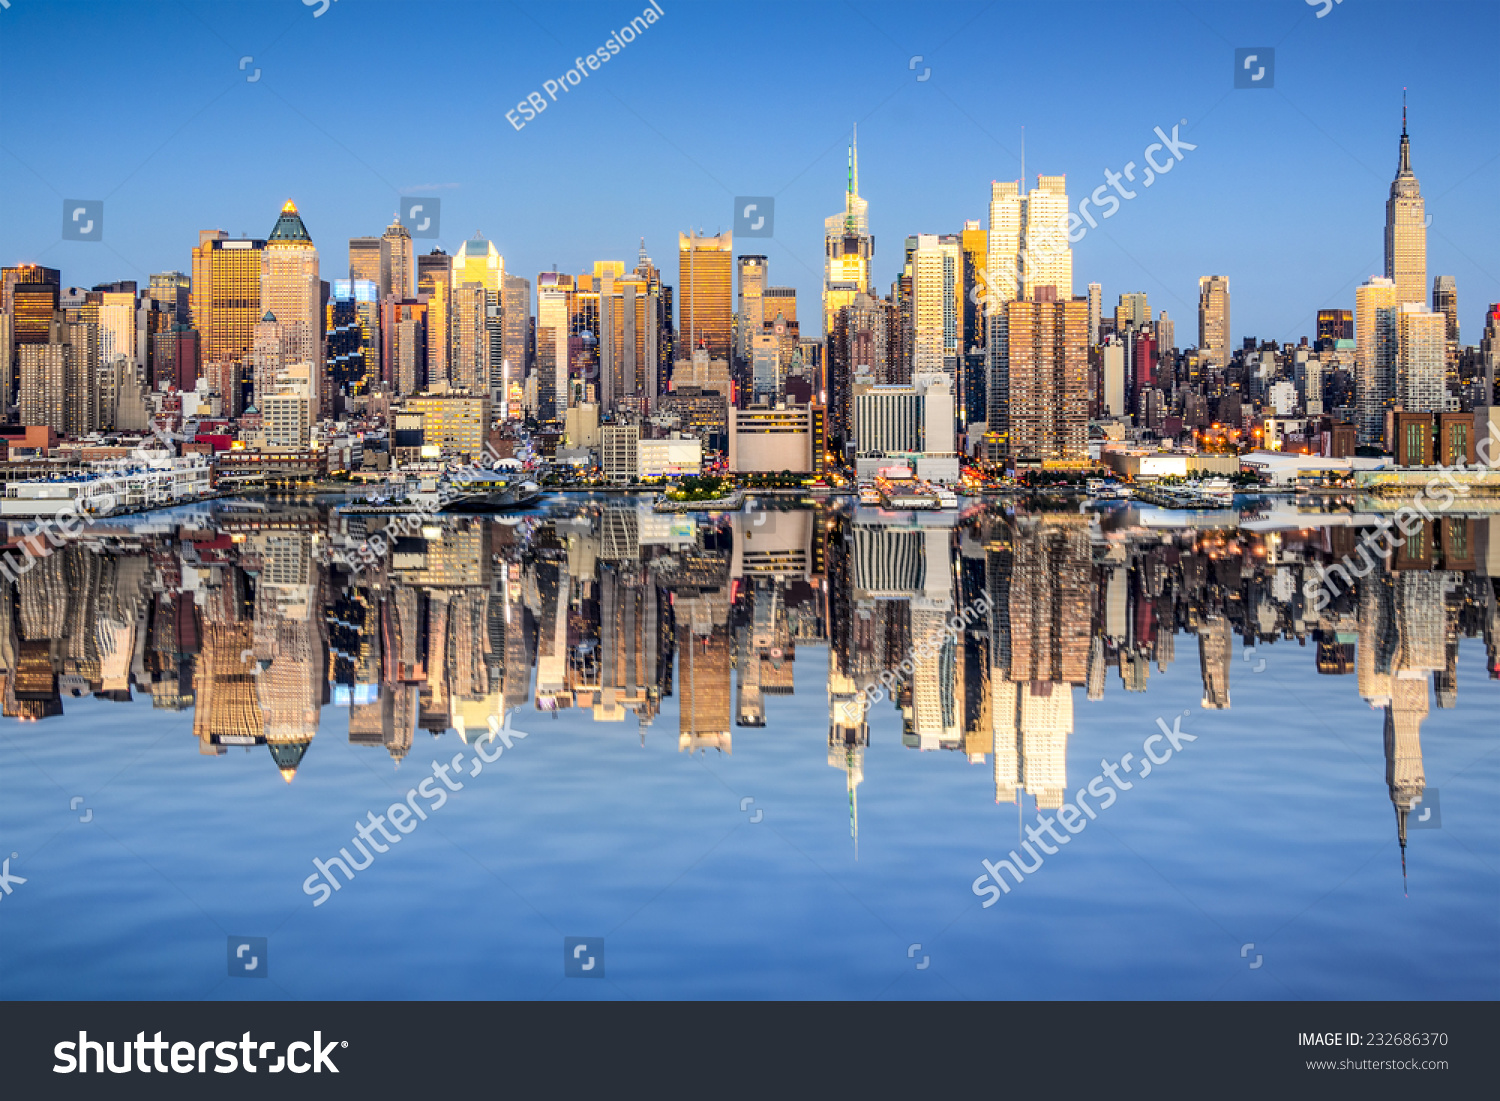 New York City, USA city skyline of Midtown Manhattan. #232686370